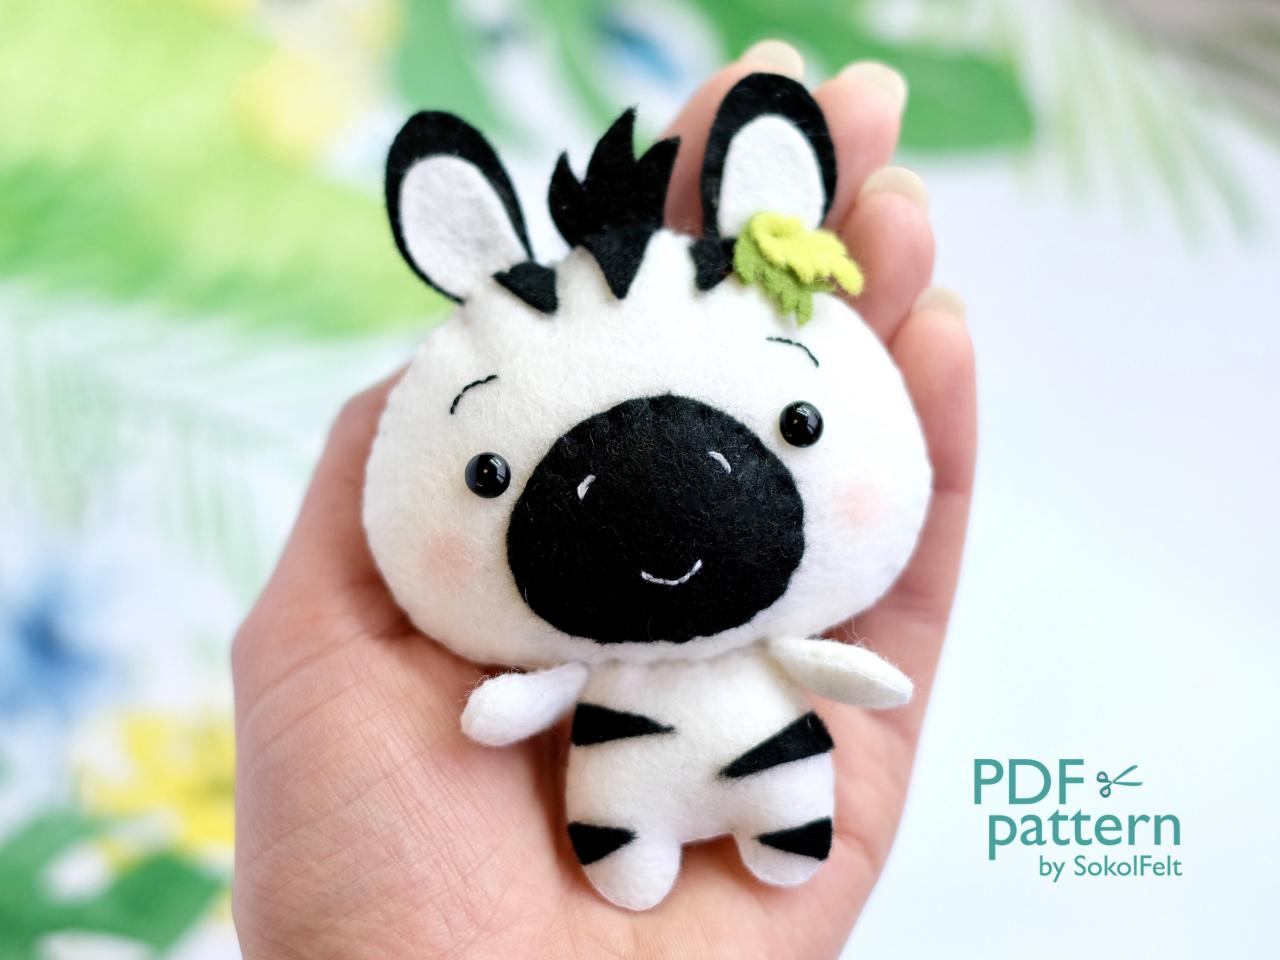 Zebra PDF pattern, Jungle safari baby animal toy sewing tutorial, African wild animal, felt baby crib mobile toy